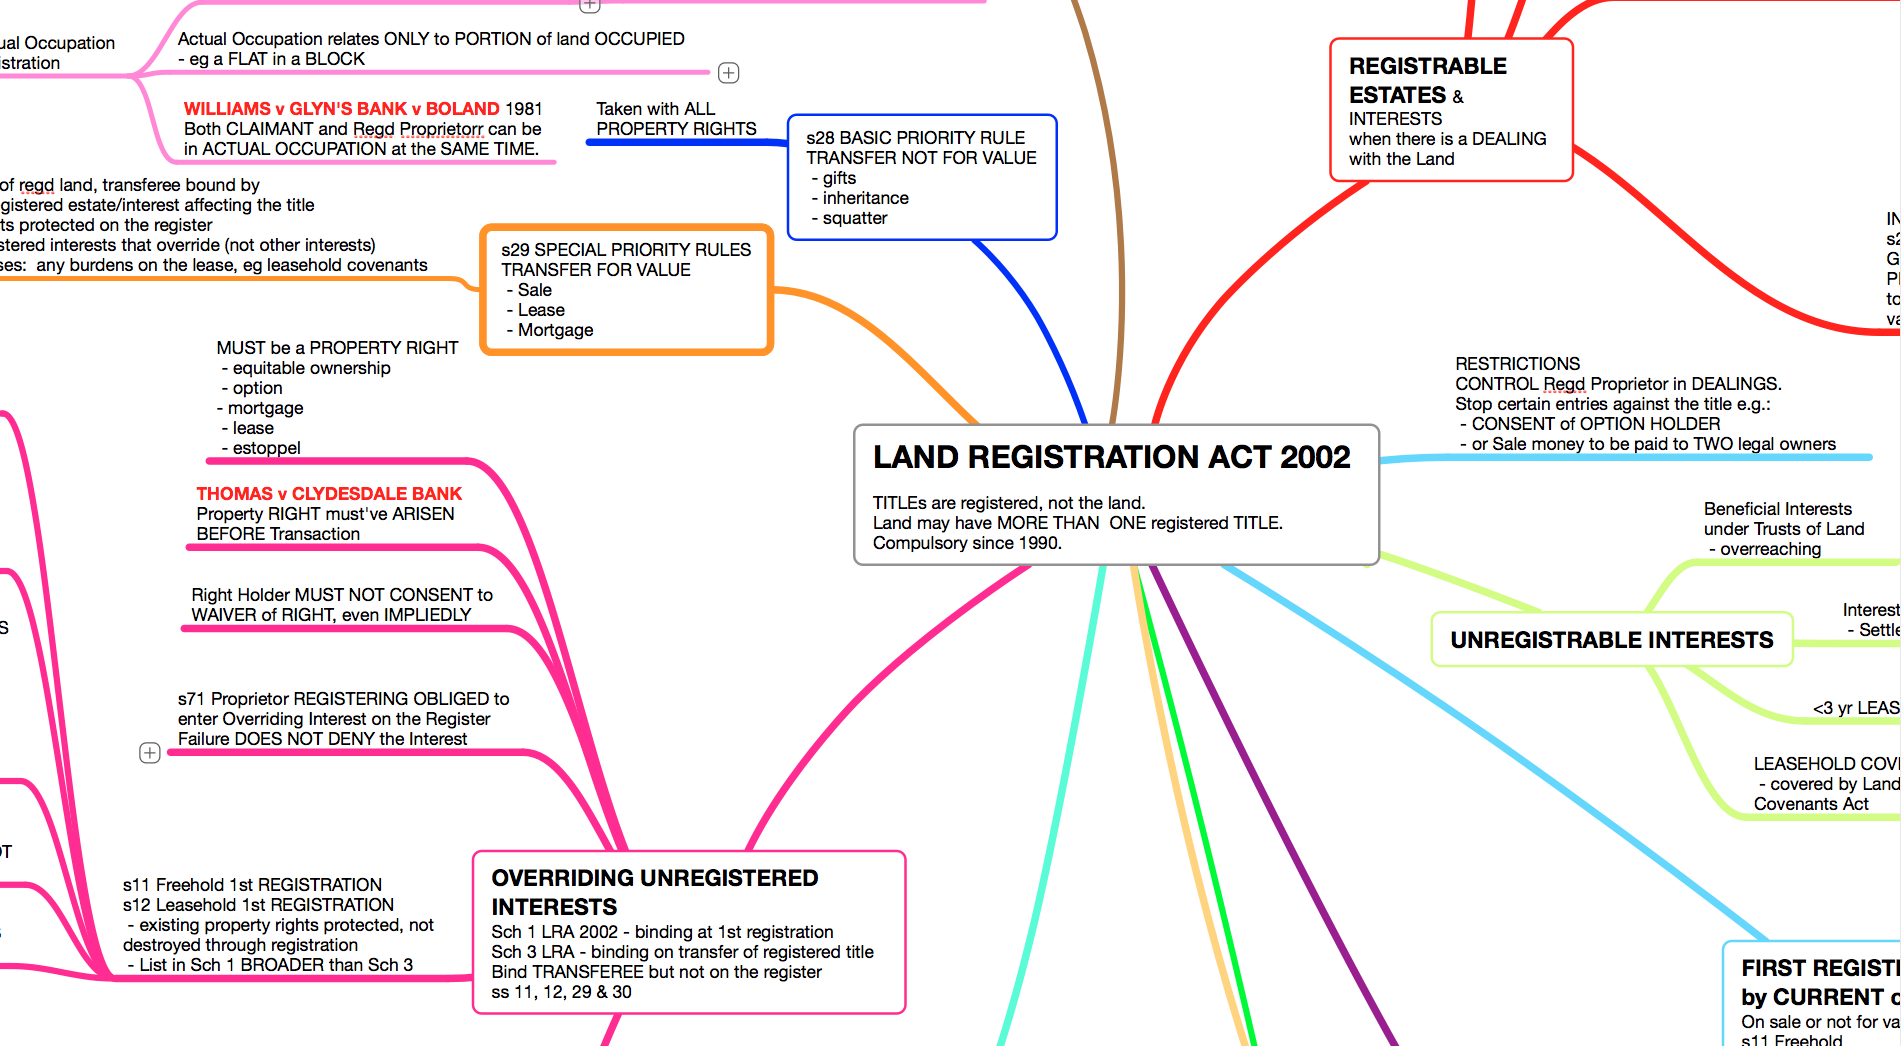 LAND REGISTRATION - LRA 2002